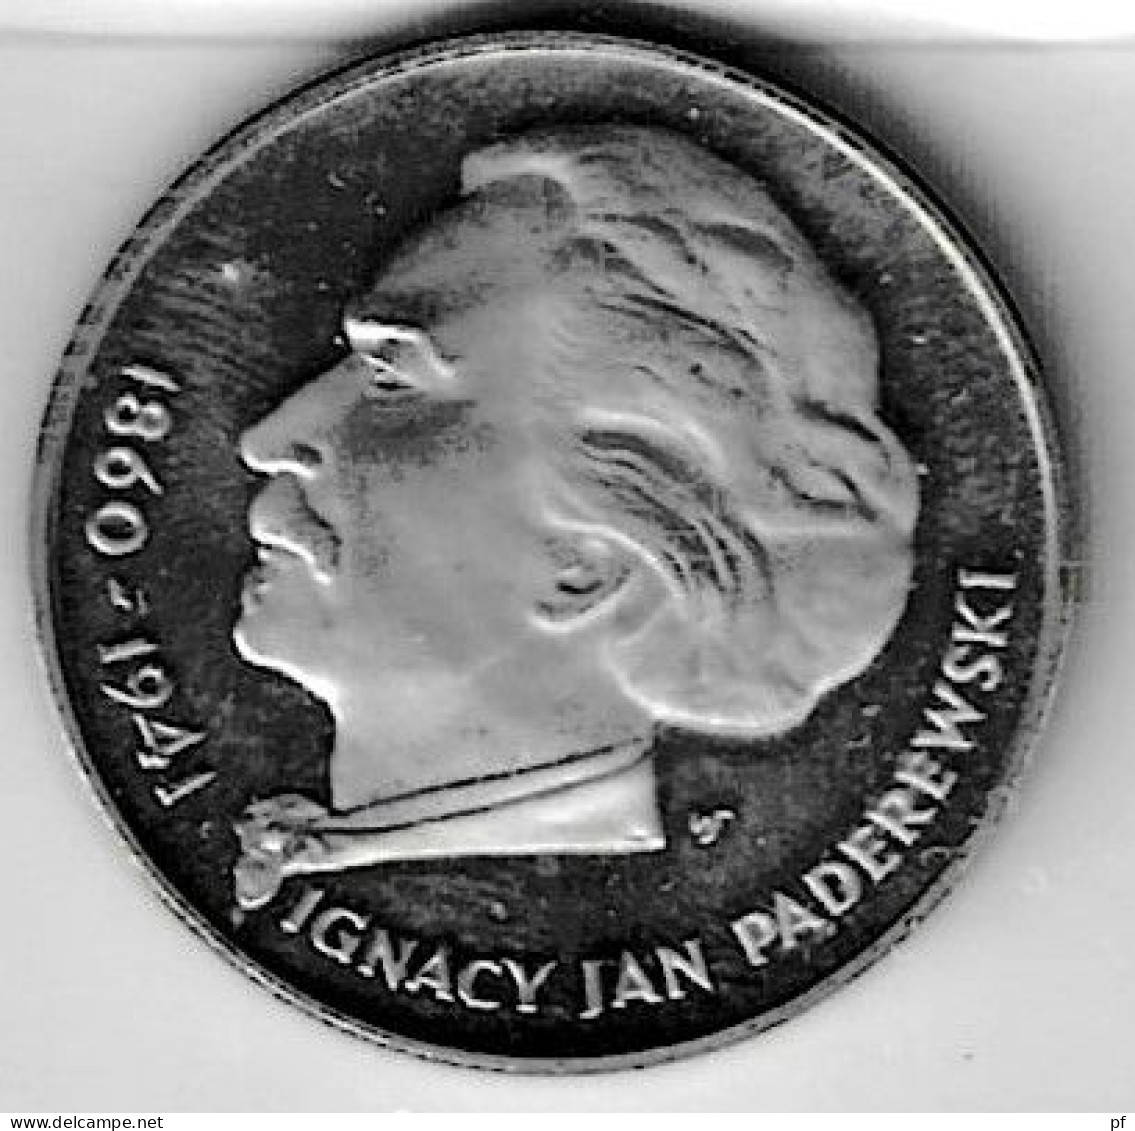 100 Zl  1975 (Ag)  Ignacy Jan Paderewski 1860-1941 - Poland